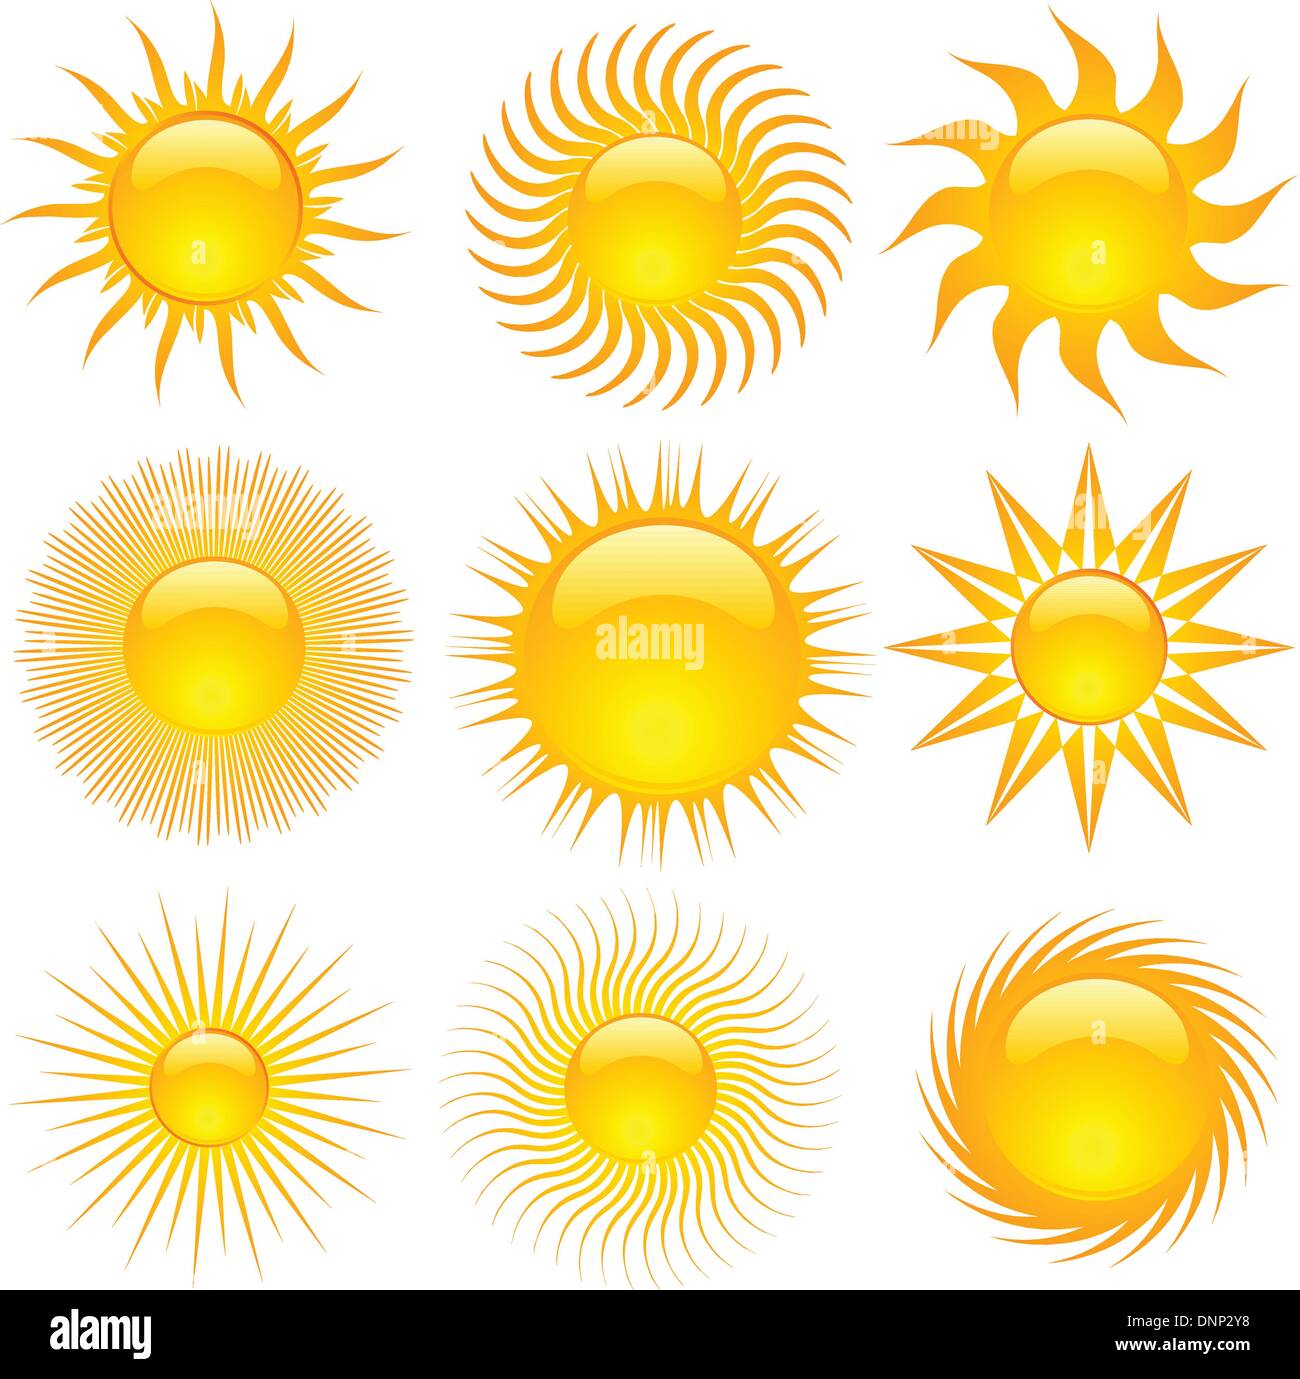 Various sun icons Stock Vector